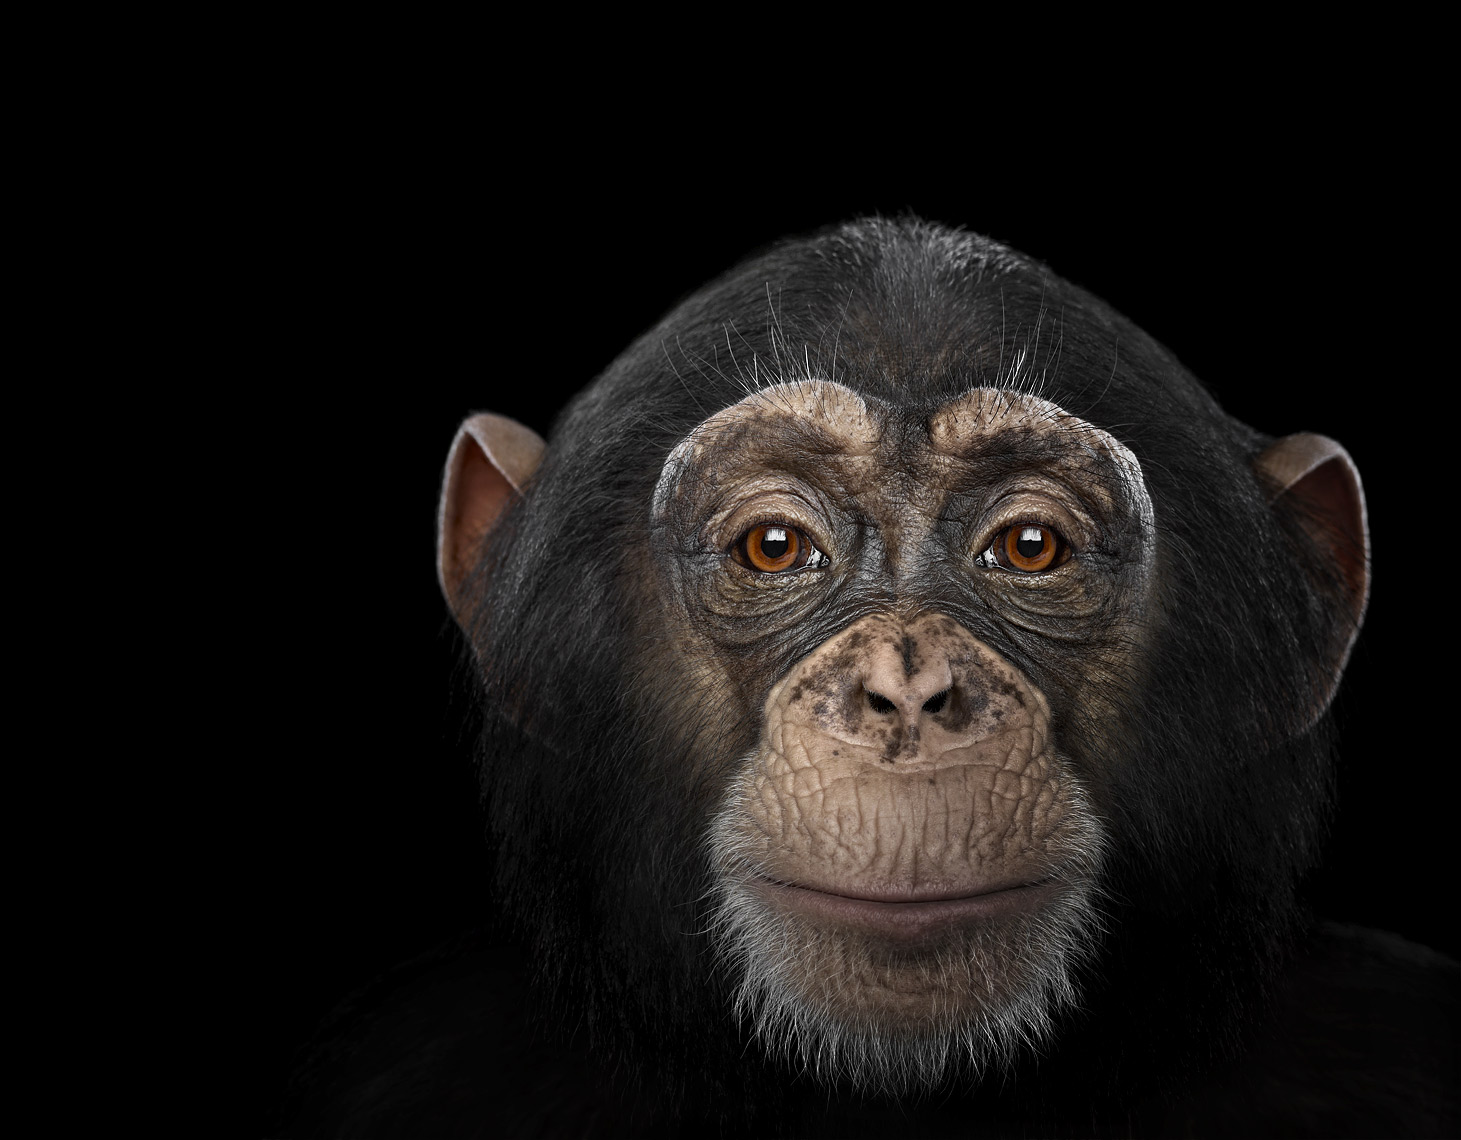 Chimpanzee dramatic frontal portrait by wildlife photographer Brad Wilson